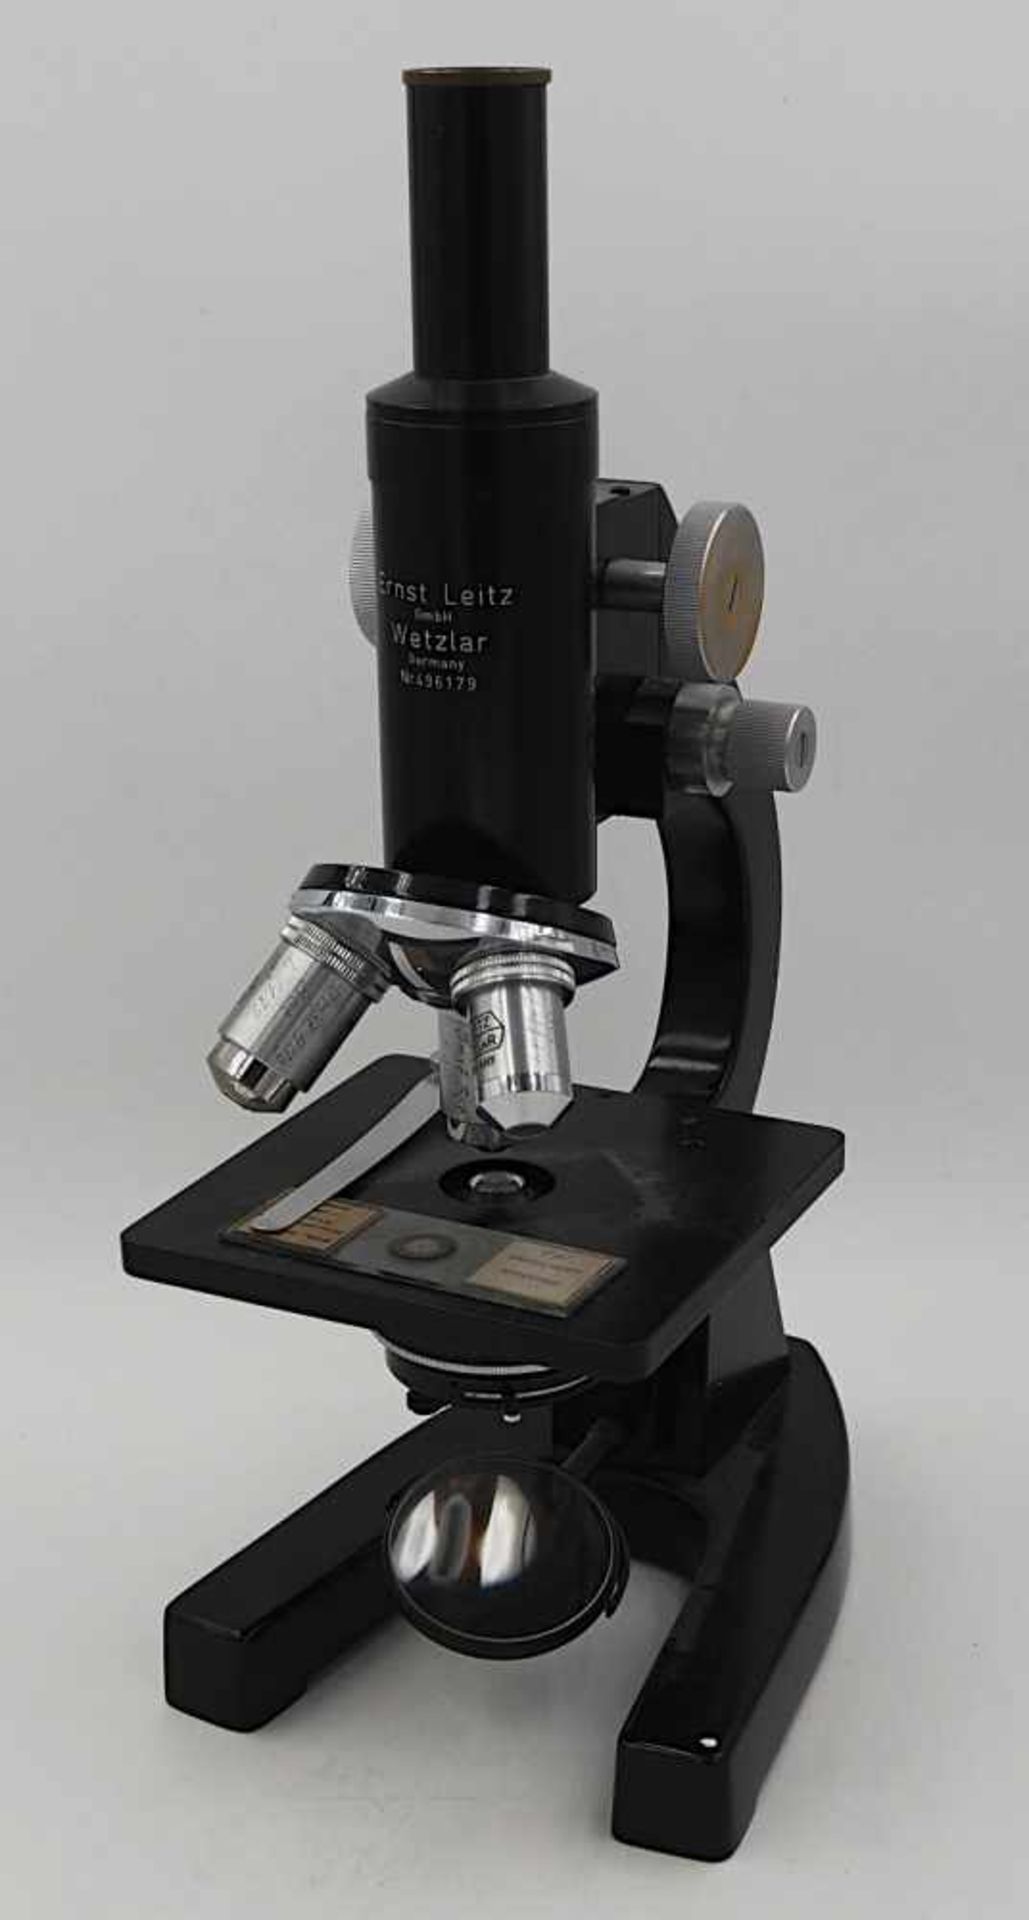 1 Mikroskop E. LEITZ, Wetzlar Nr. 496179Mikroskop LEITZ Nr. 742347 sowie Nr. 576064, m - Bild 3 aus 3